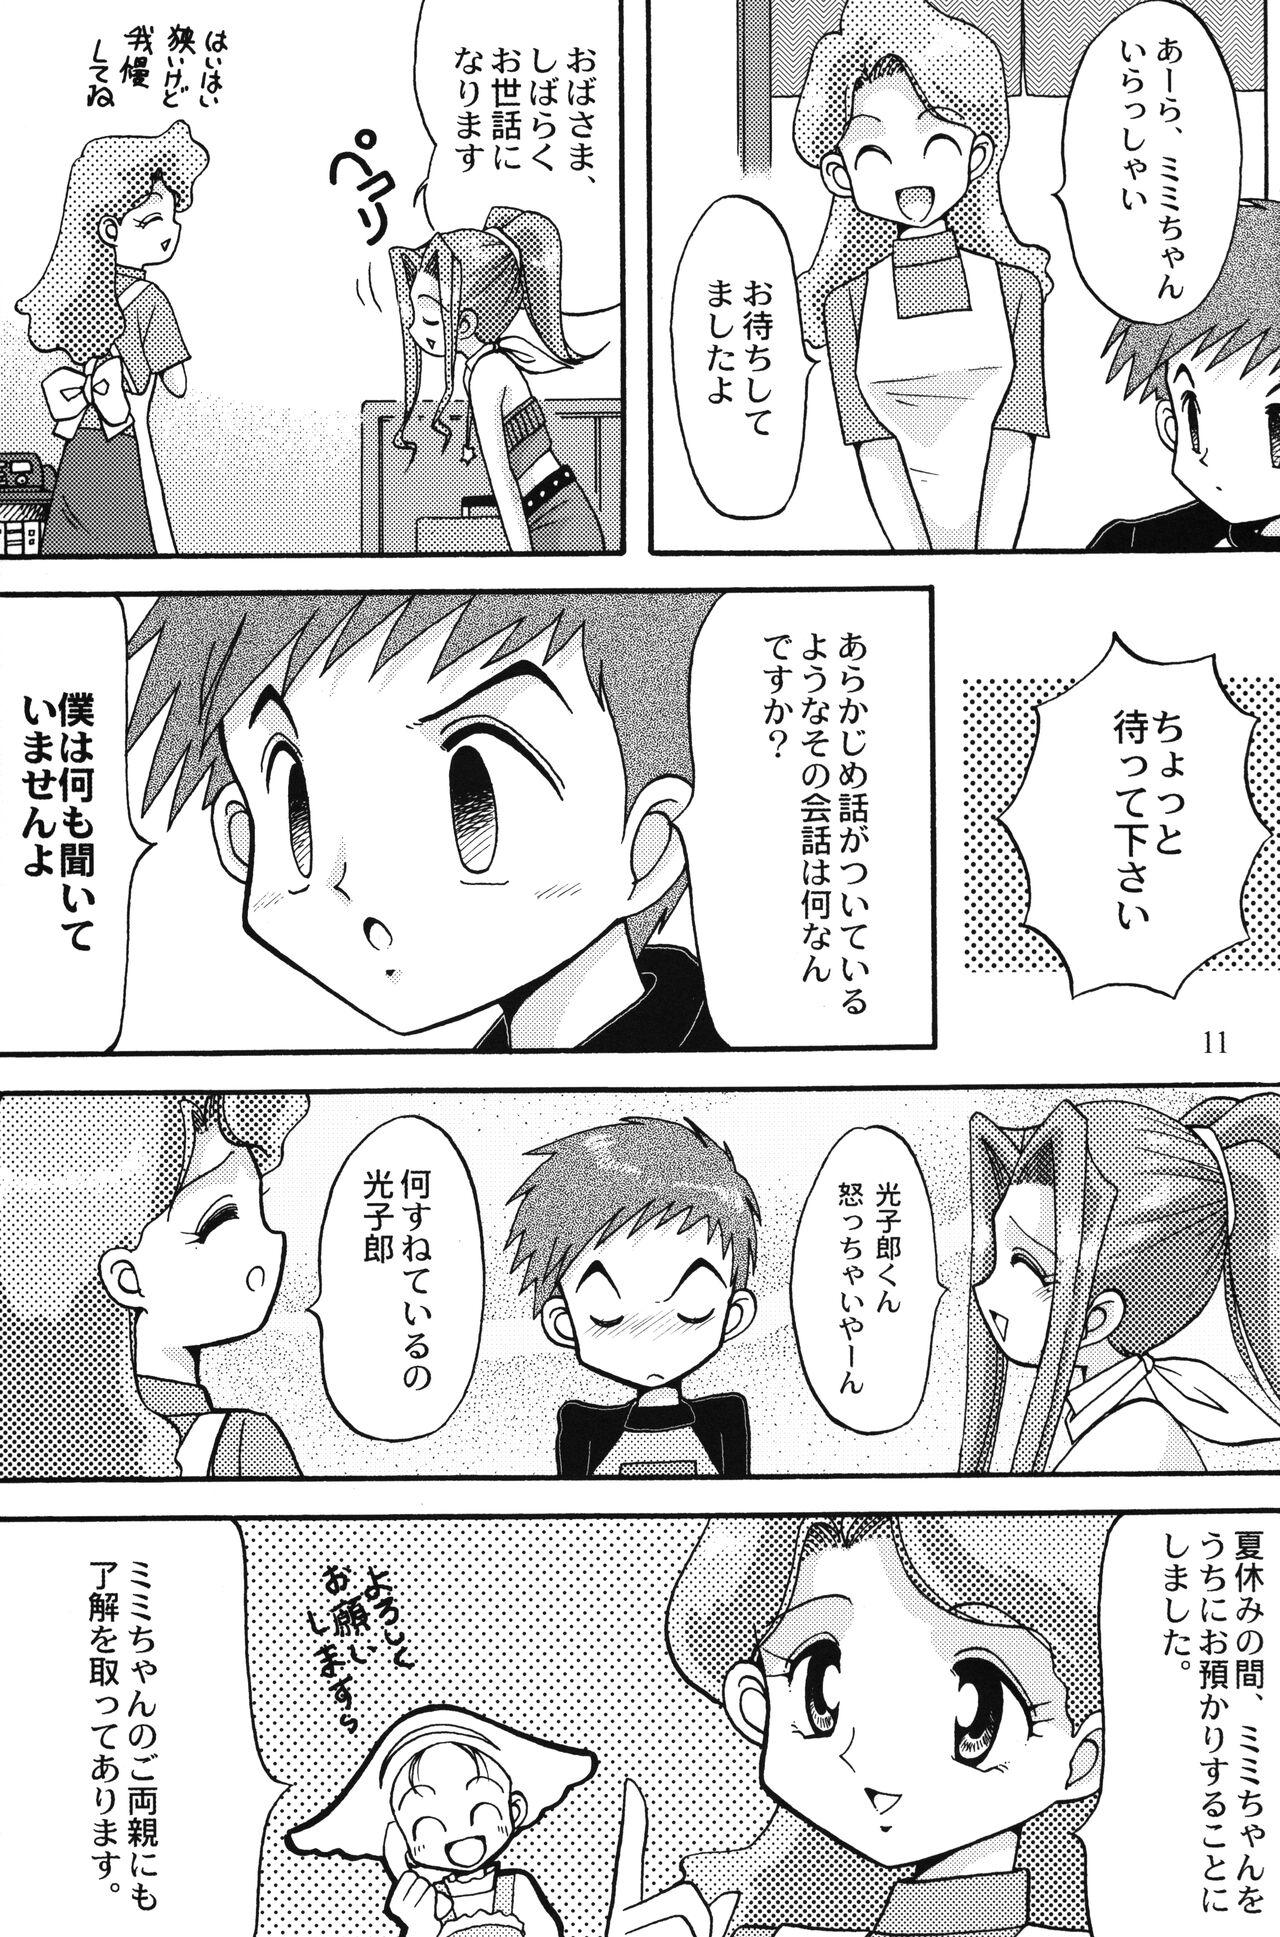 Slutty Sora Mimi Hour 4 - Digimon adventure Cousin - Page 10